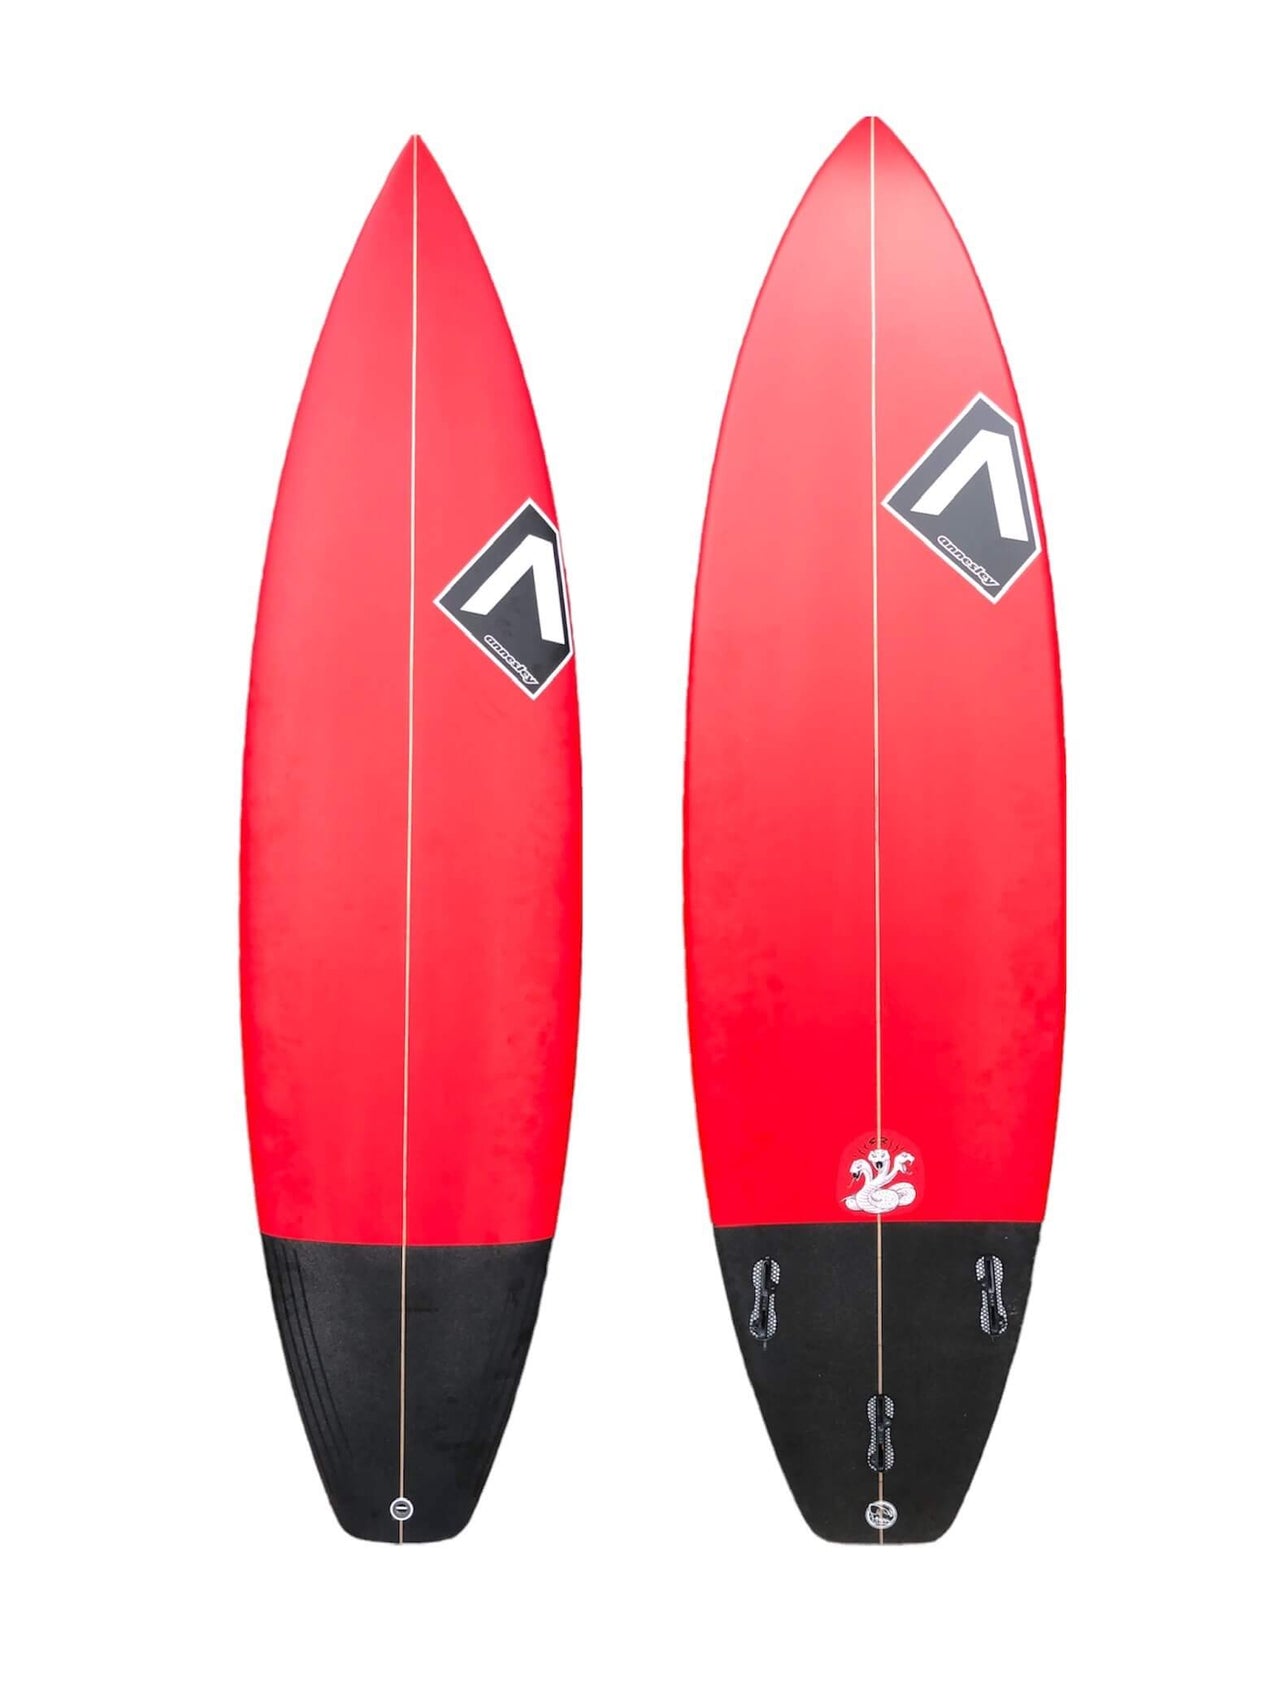 S3 Model annesley surfboards 1